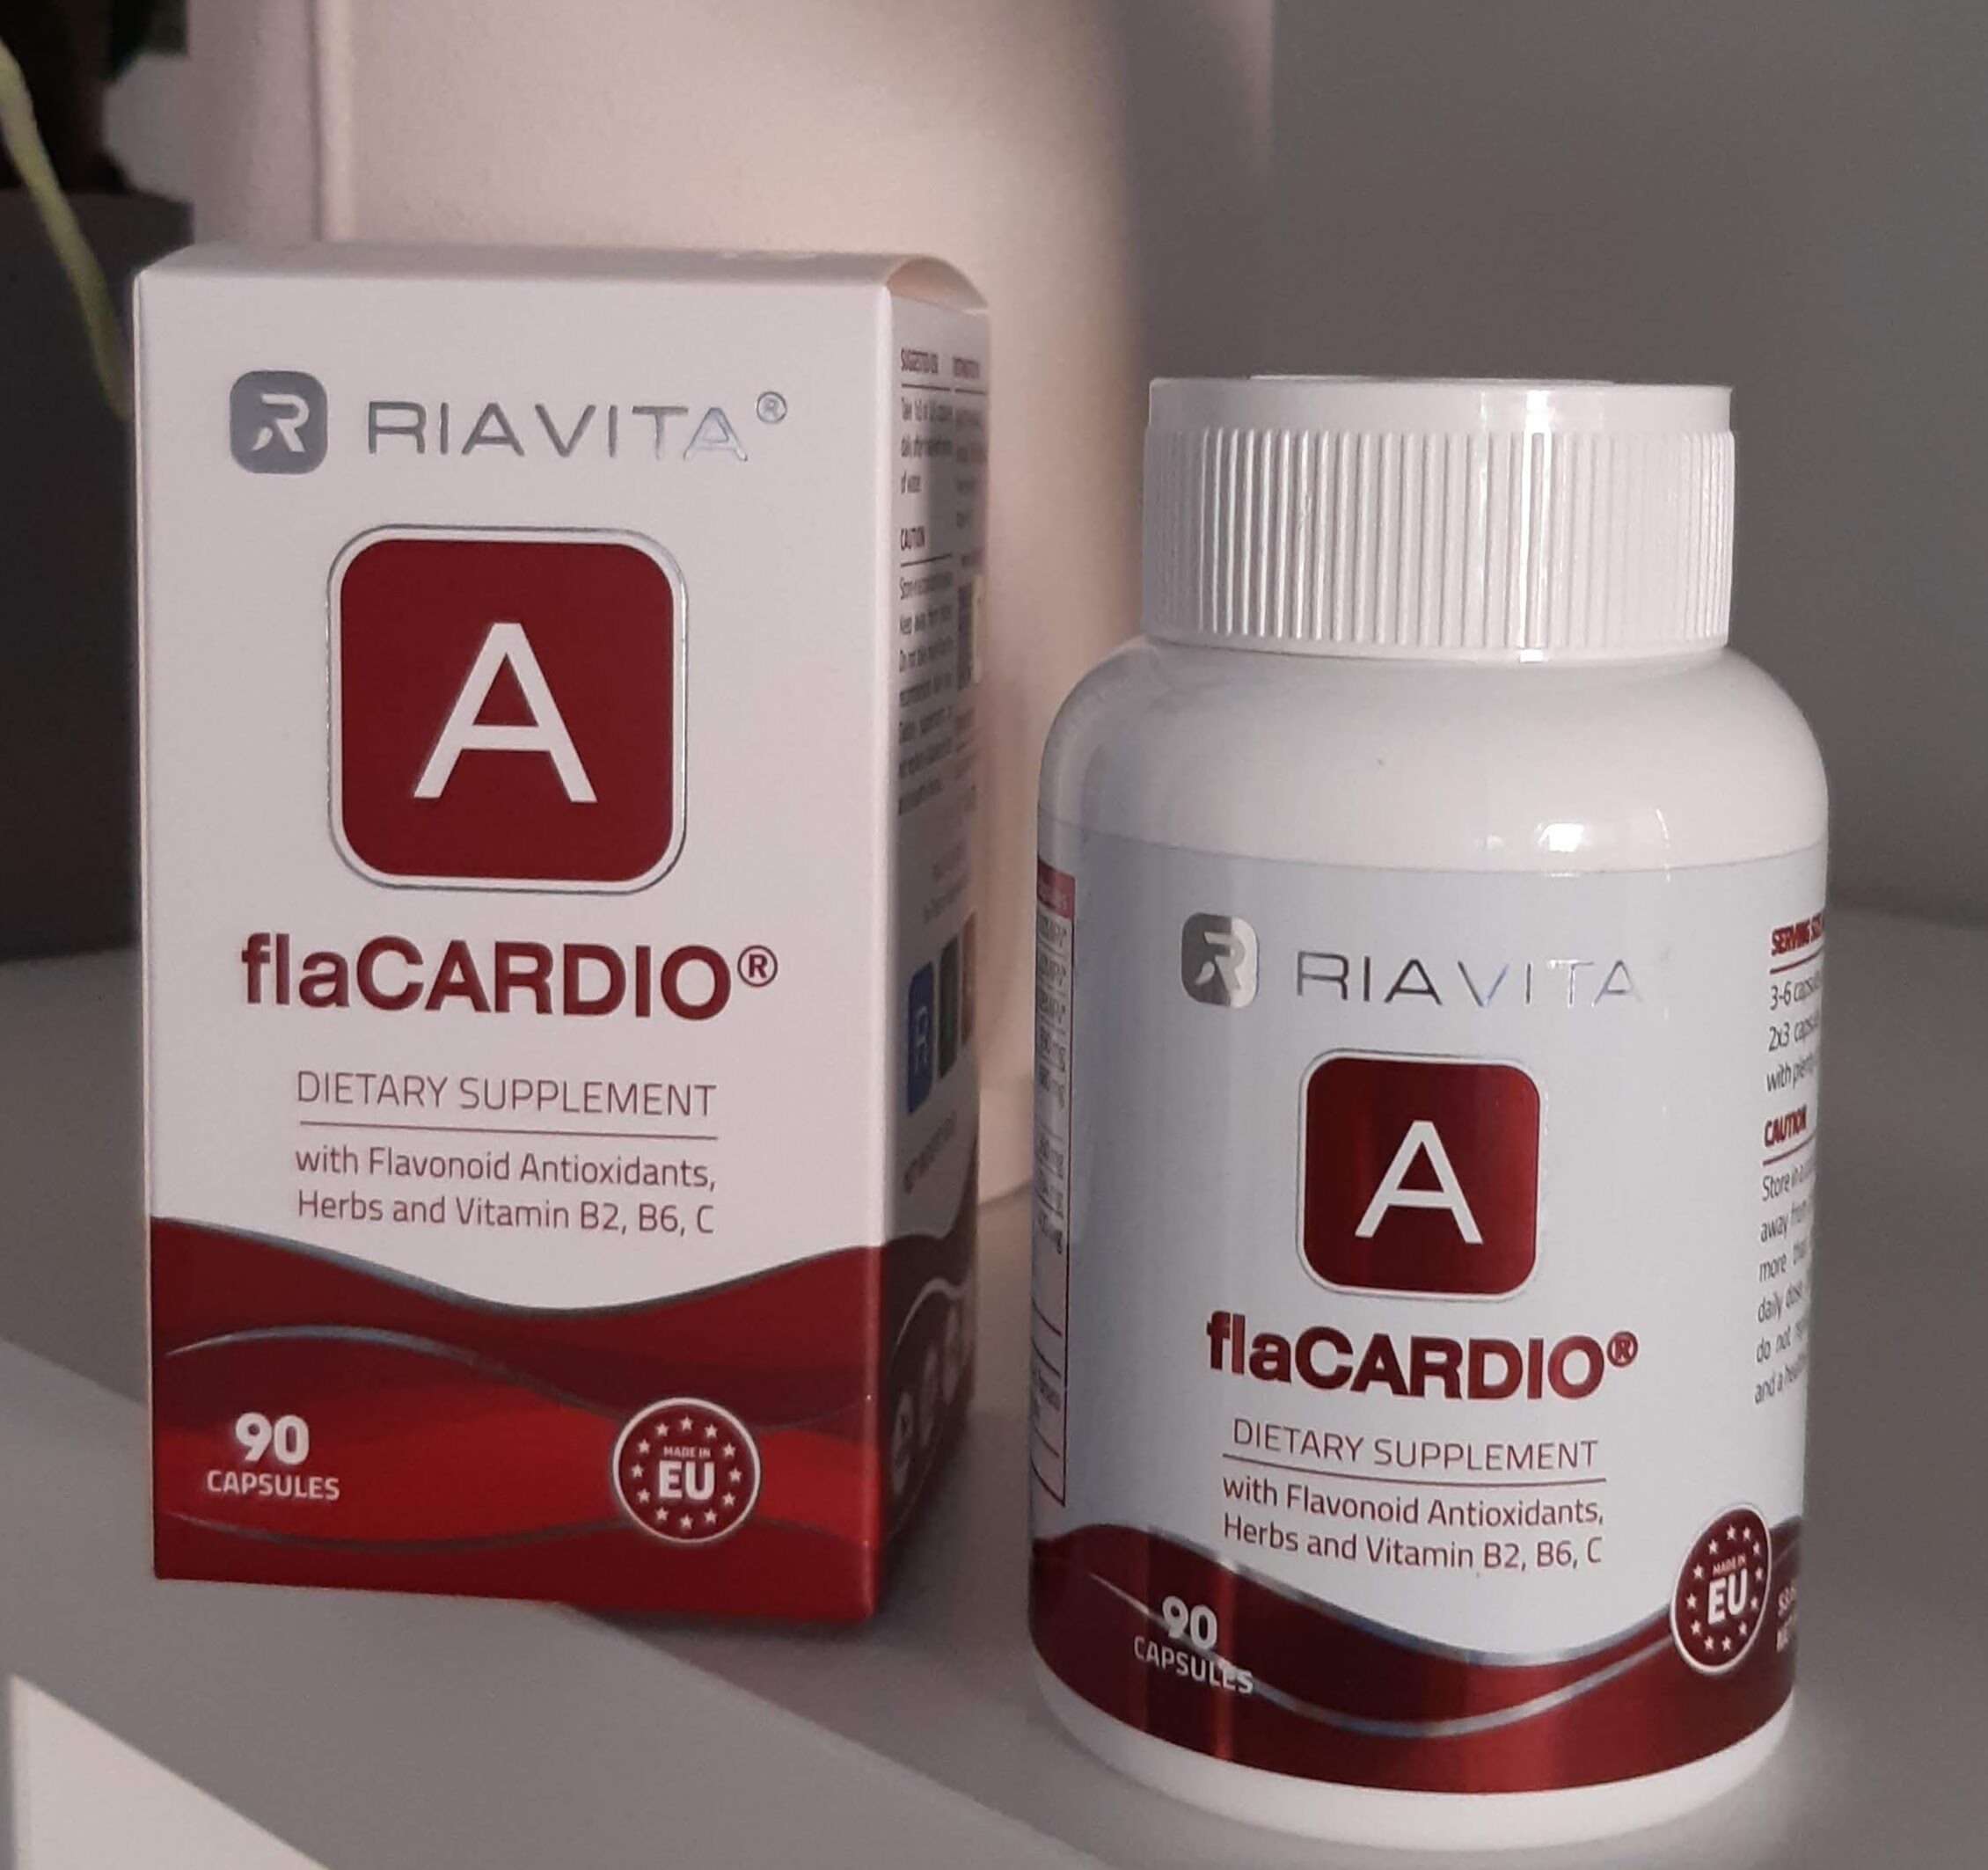 RIAVITA FlaCardio dietary supplement - Product - en